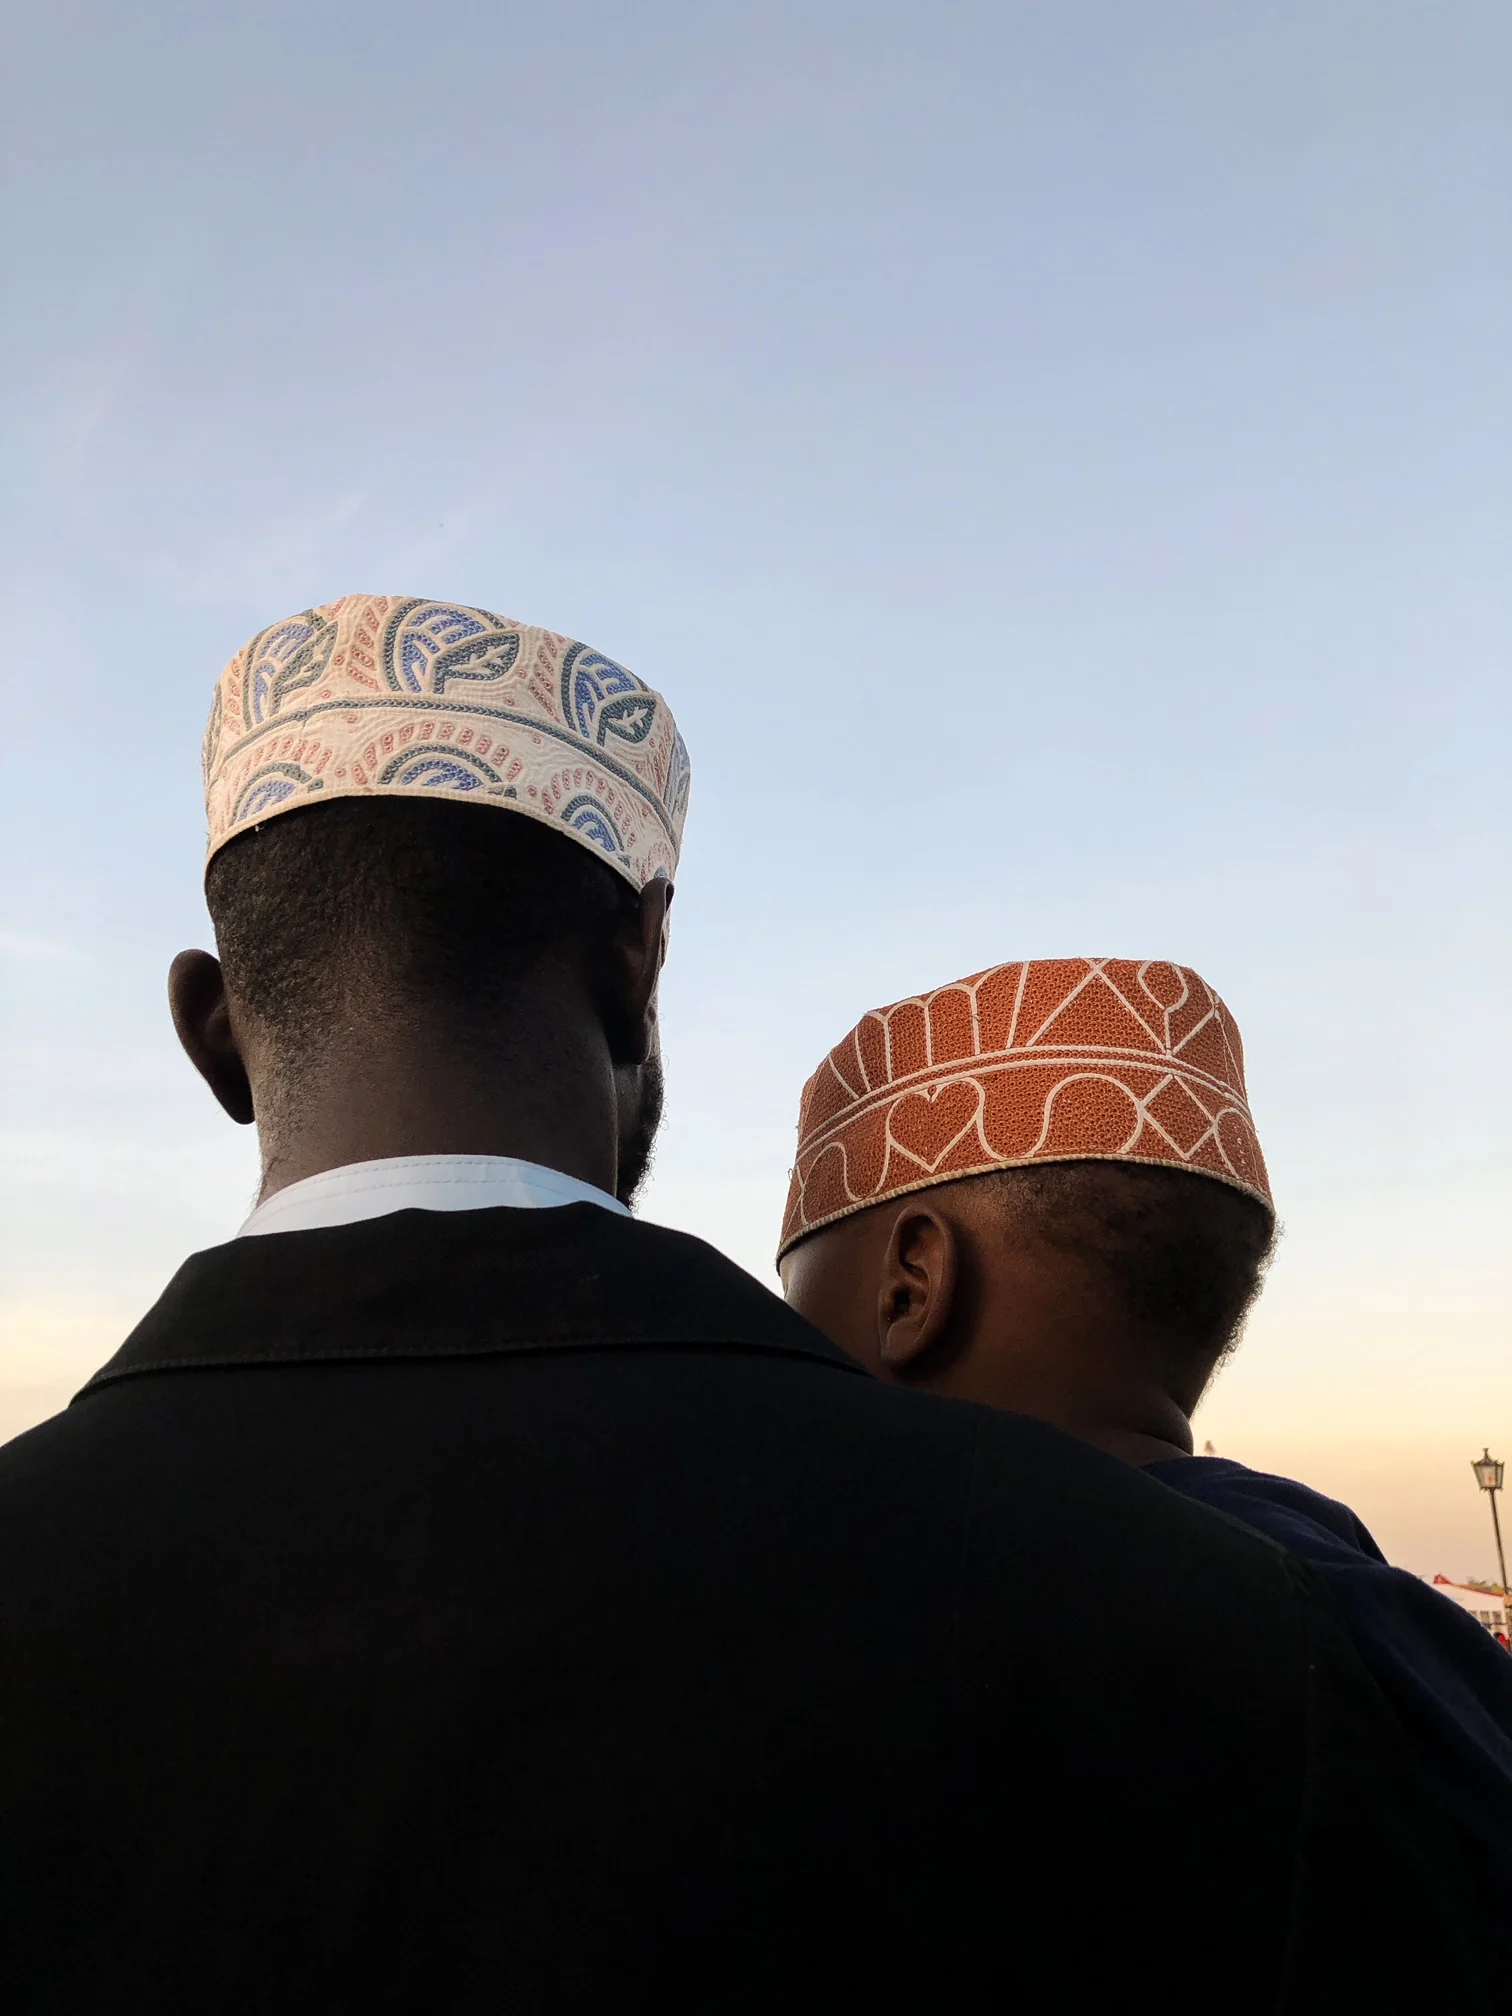 A photograph of two men wearing Taqiyahs from behind, taken in Zanzibar, Tanzania. 